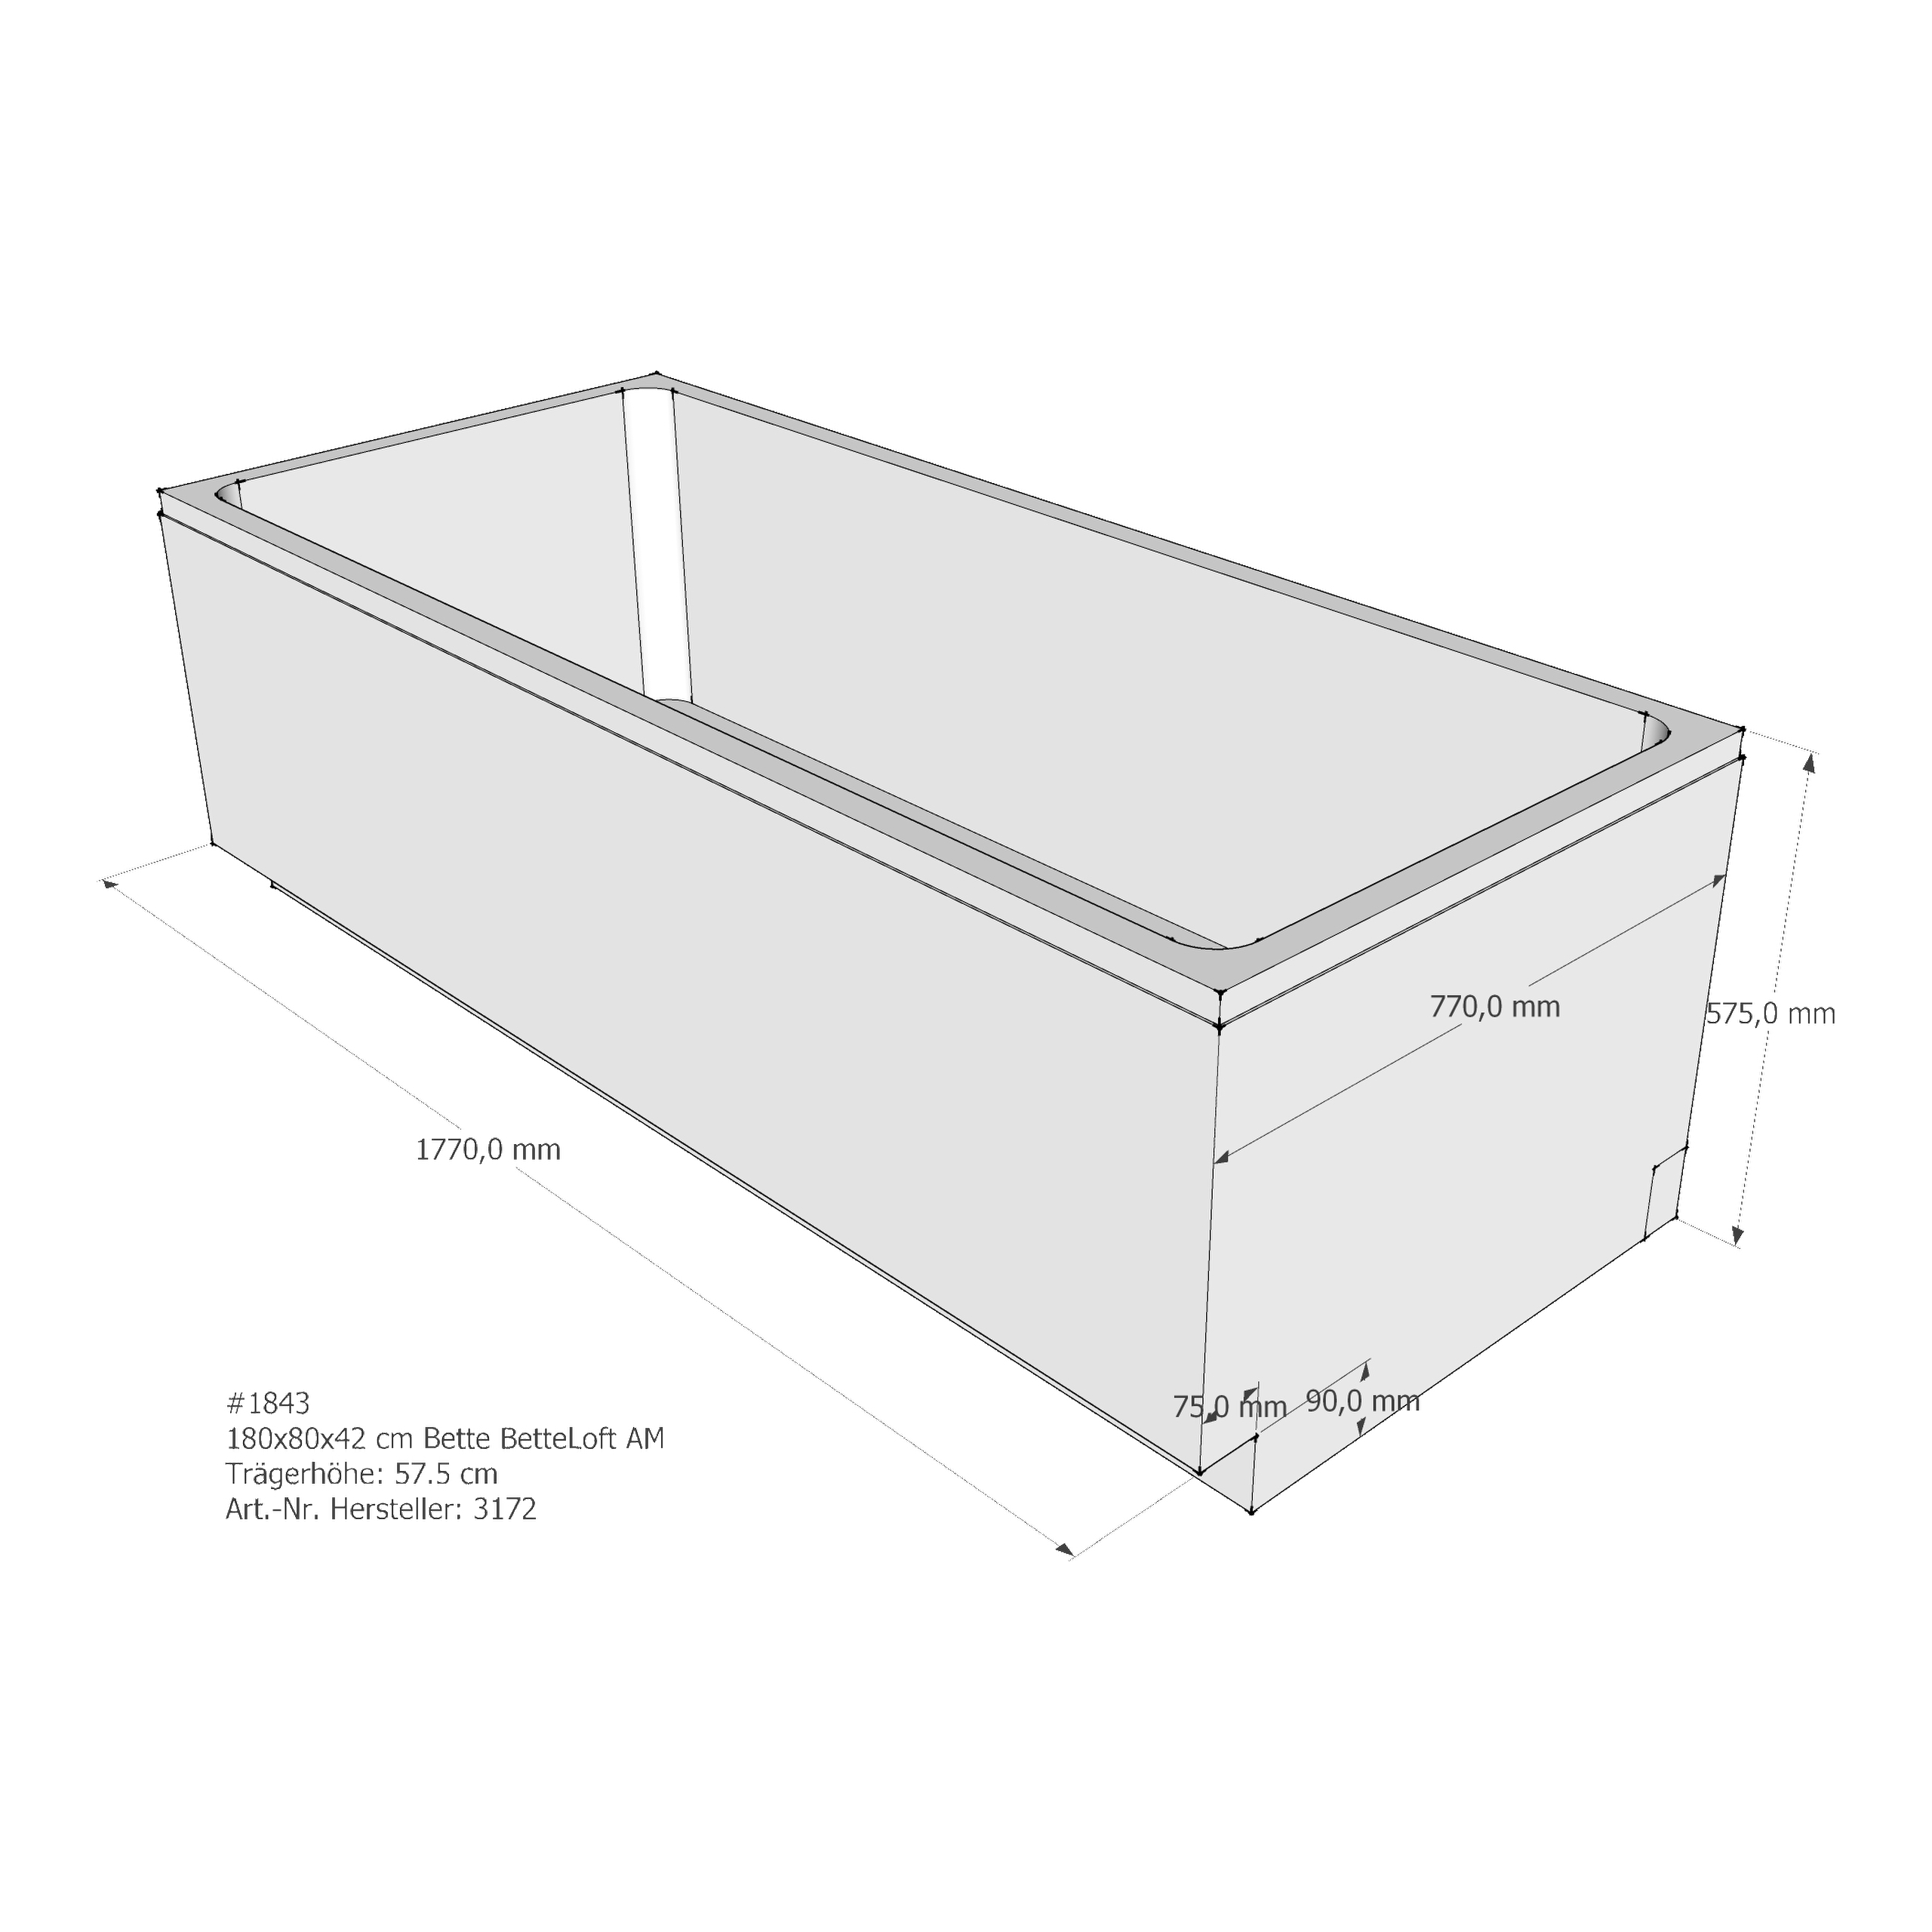 Badewannenträger für Bette BetteLoft 180 × 80 × 42 cm